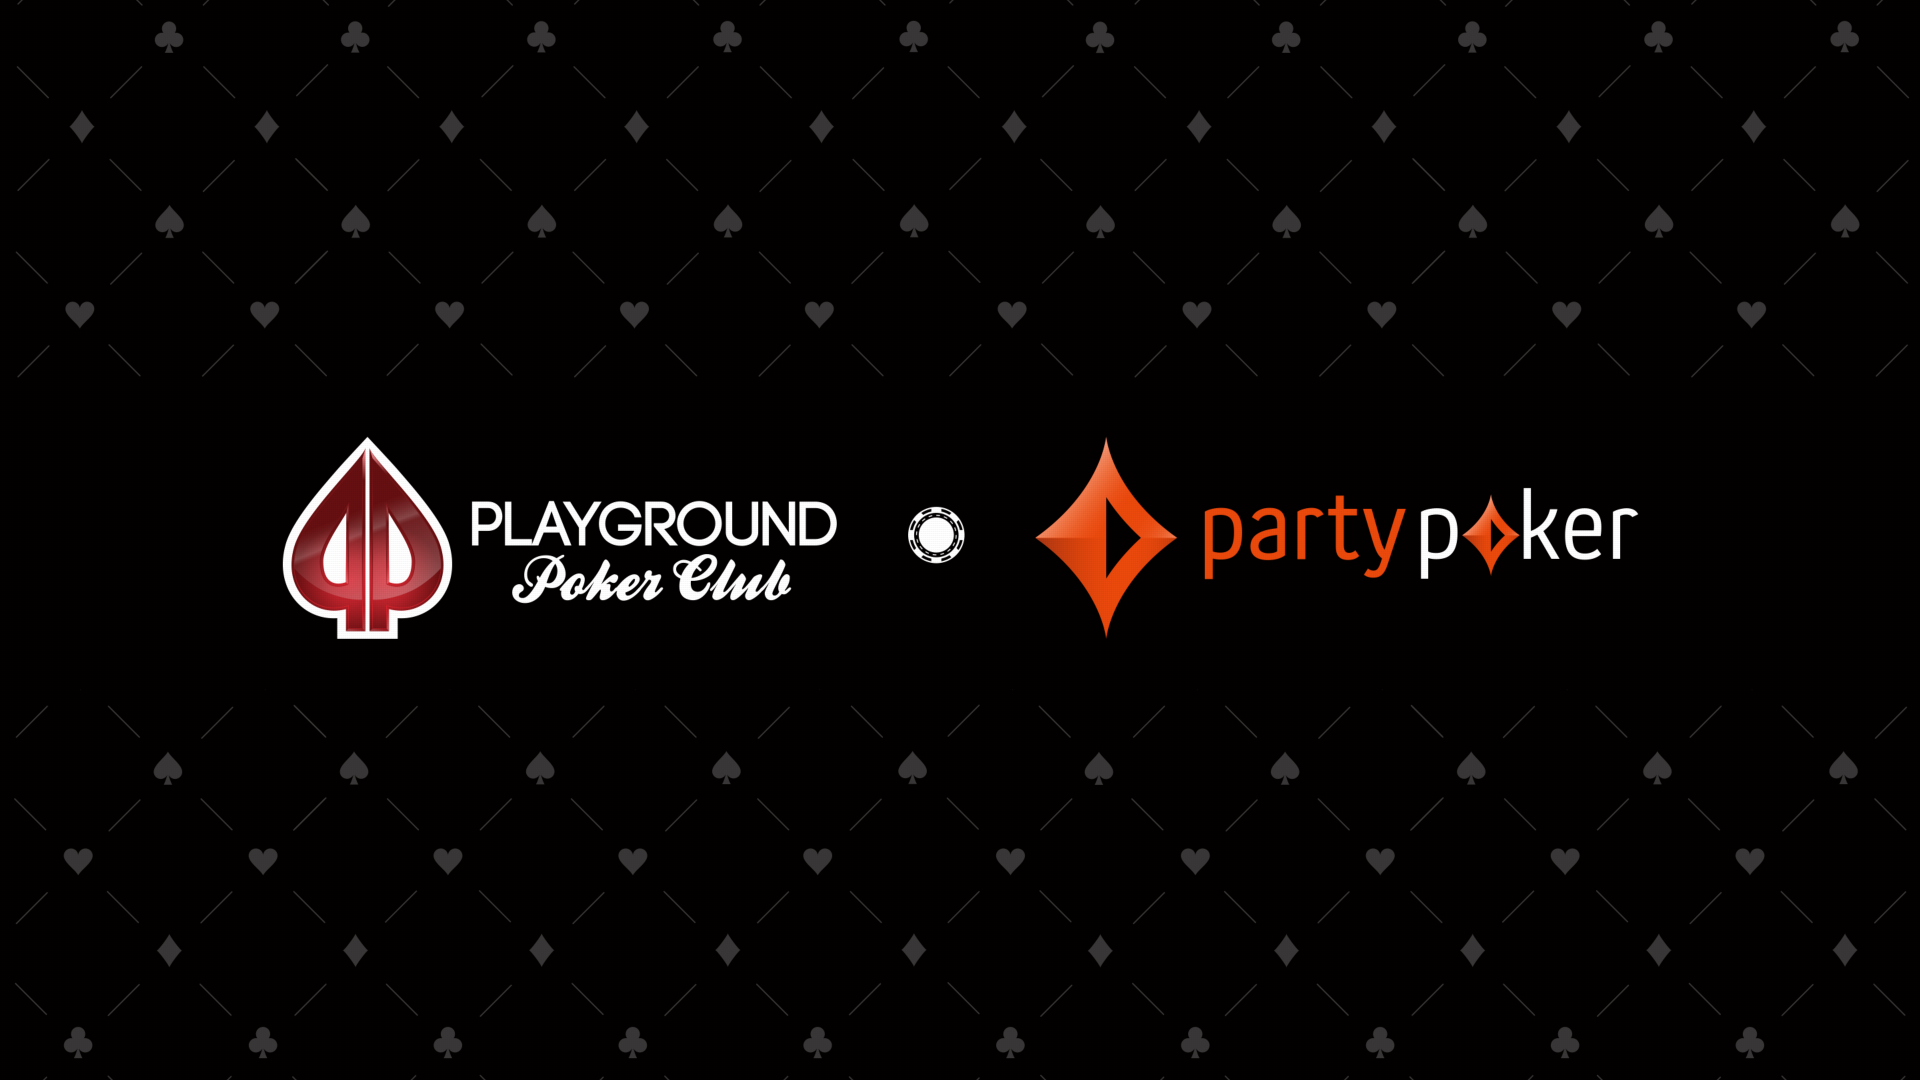 Playground Poker & partypoker form new partnership!